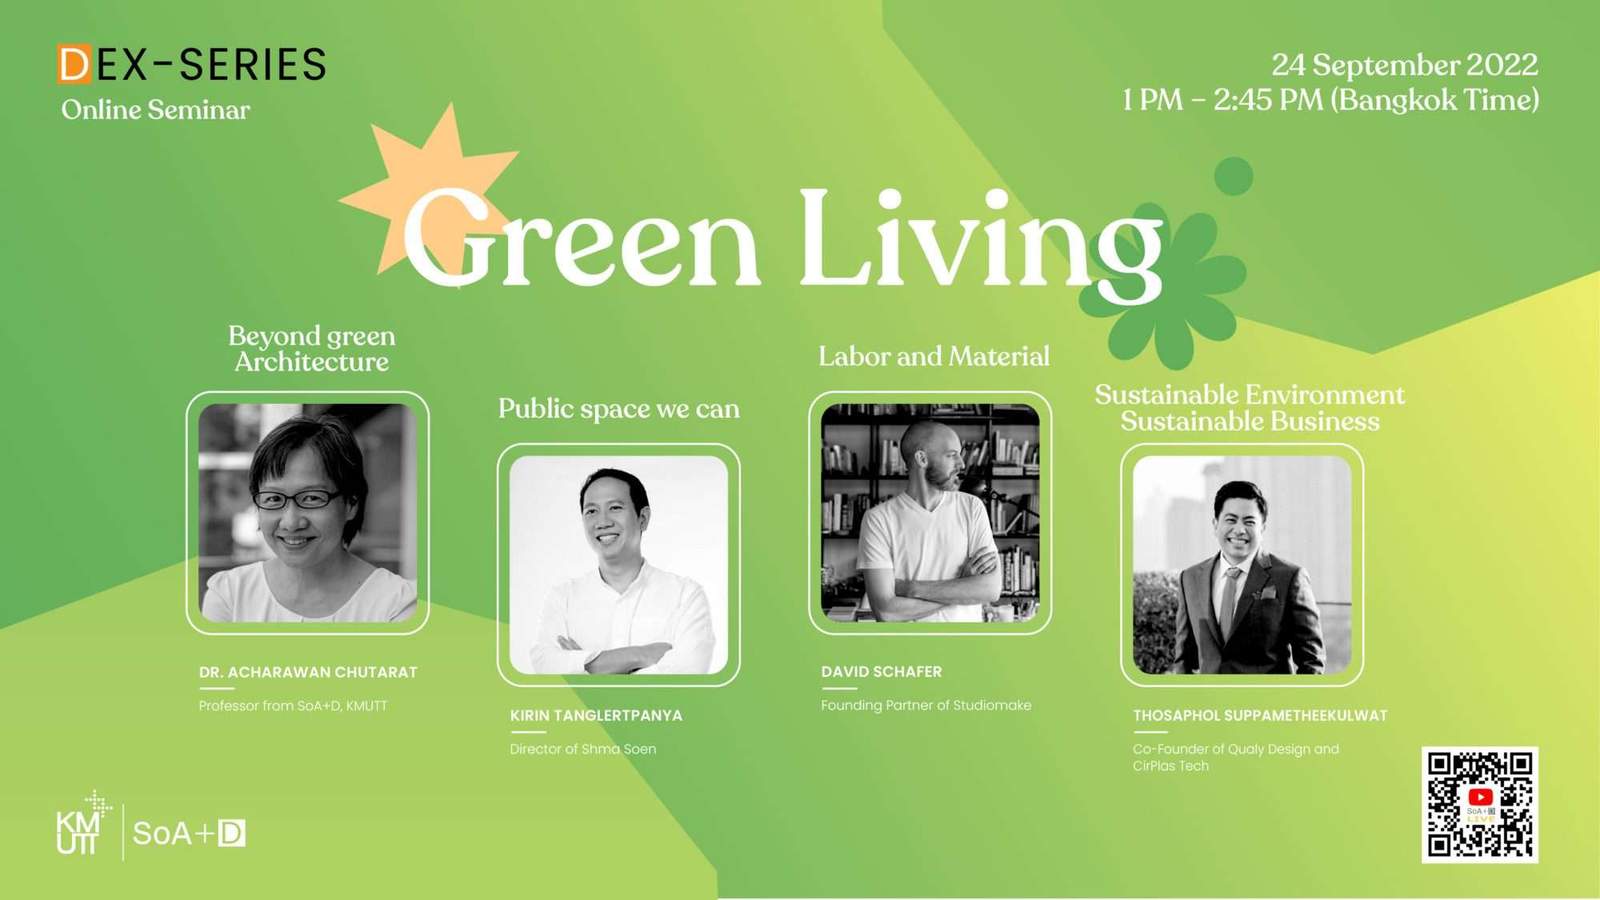 Online Lecture "Green Living by SoA+D" محاضرة عبر الإنترنت بعنوان "Green Living by SoA + D"